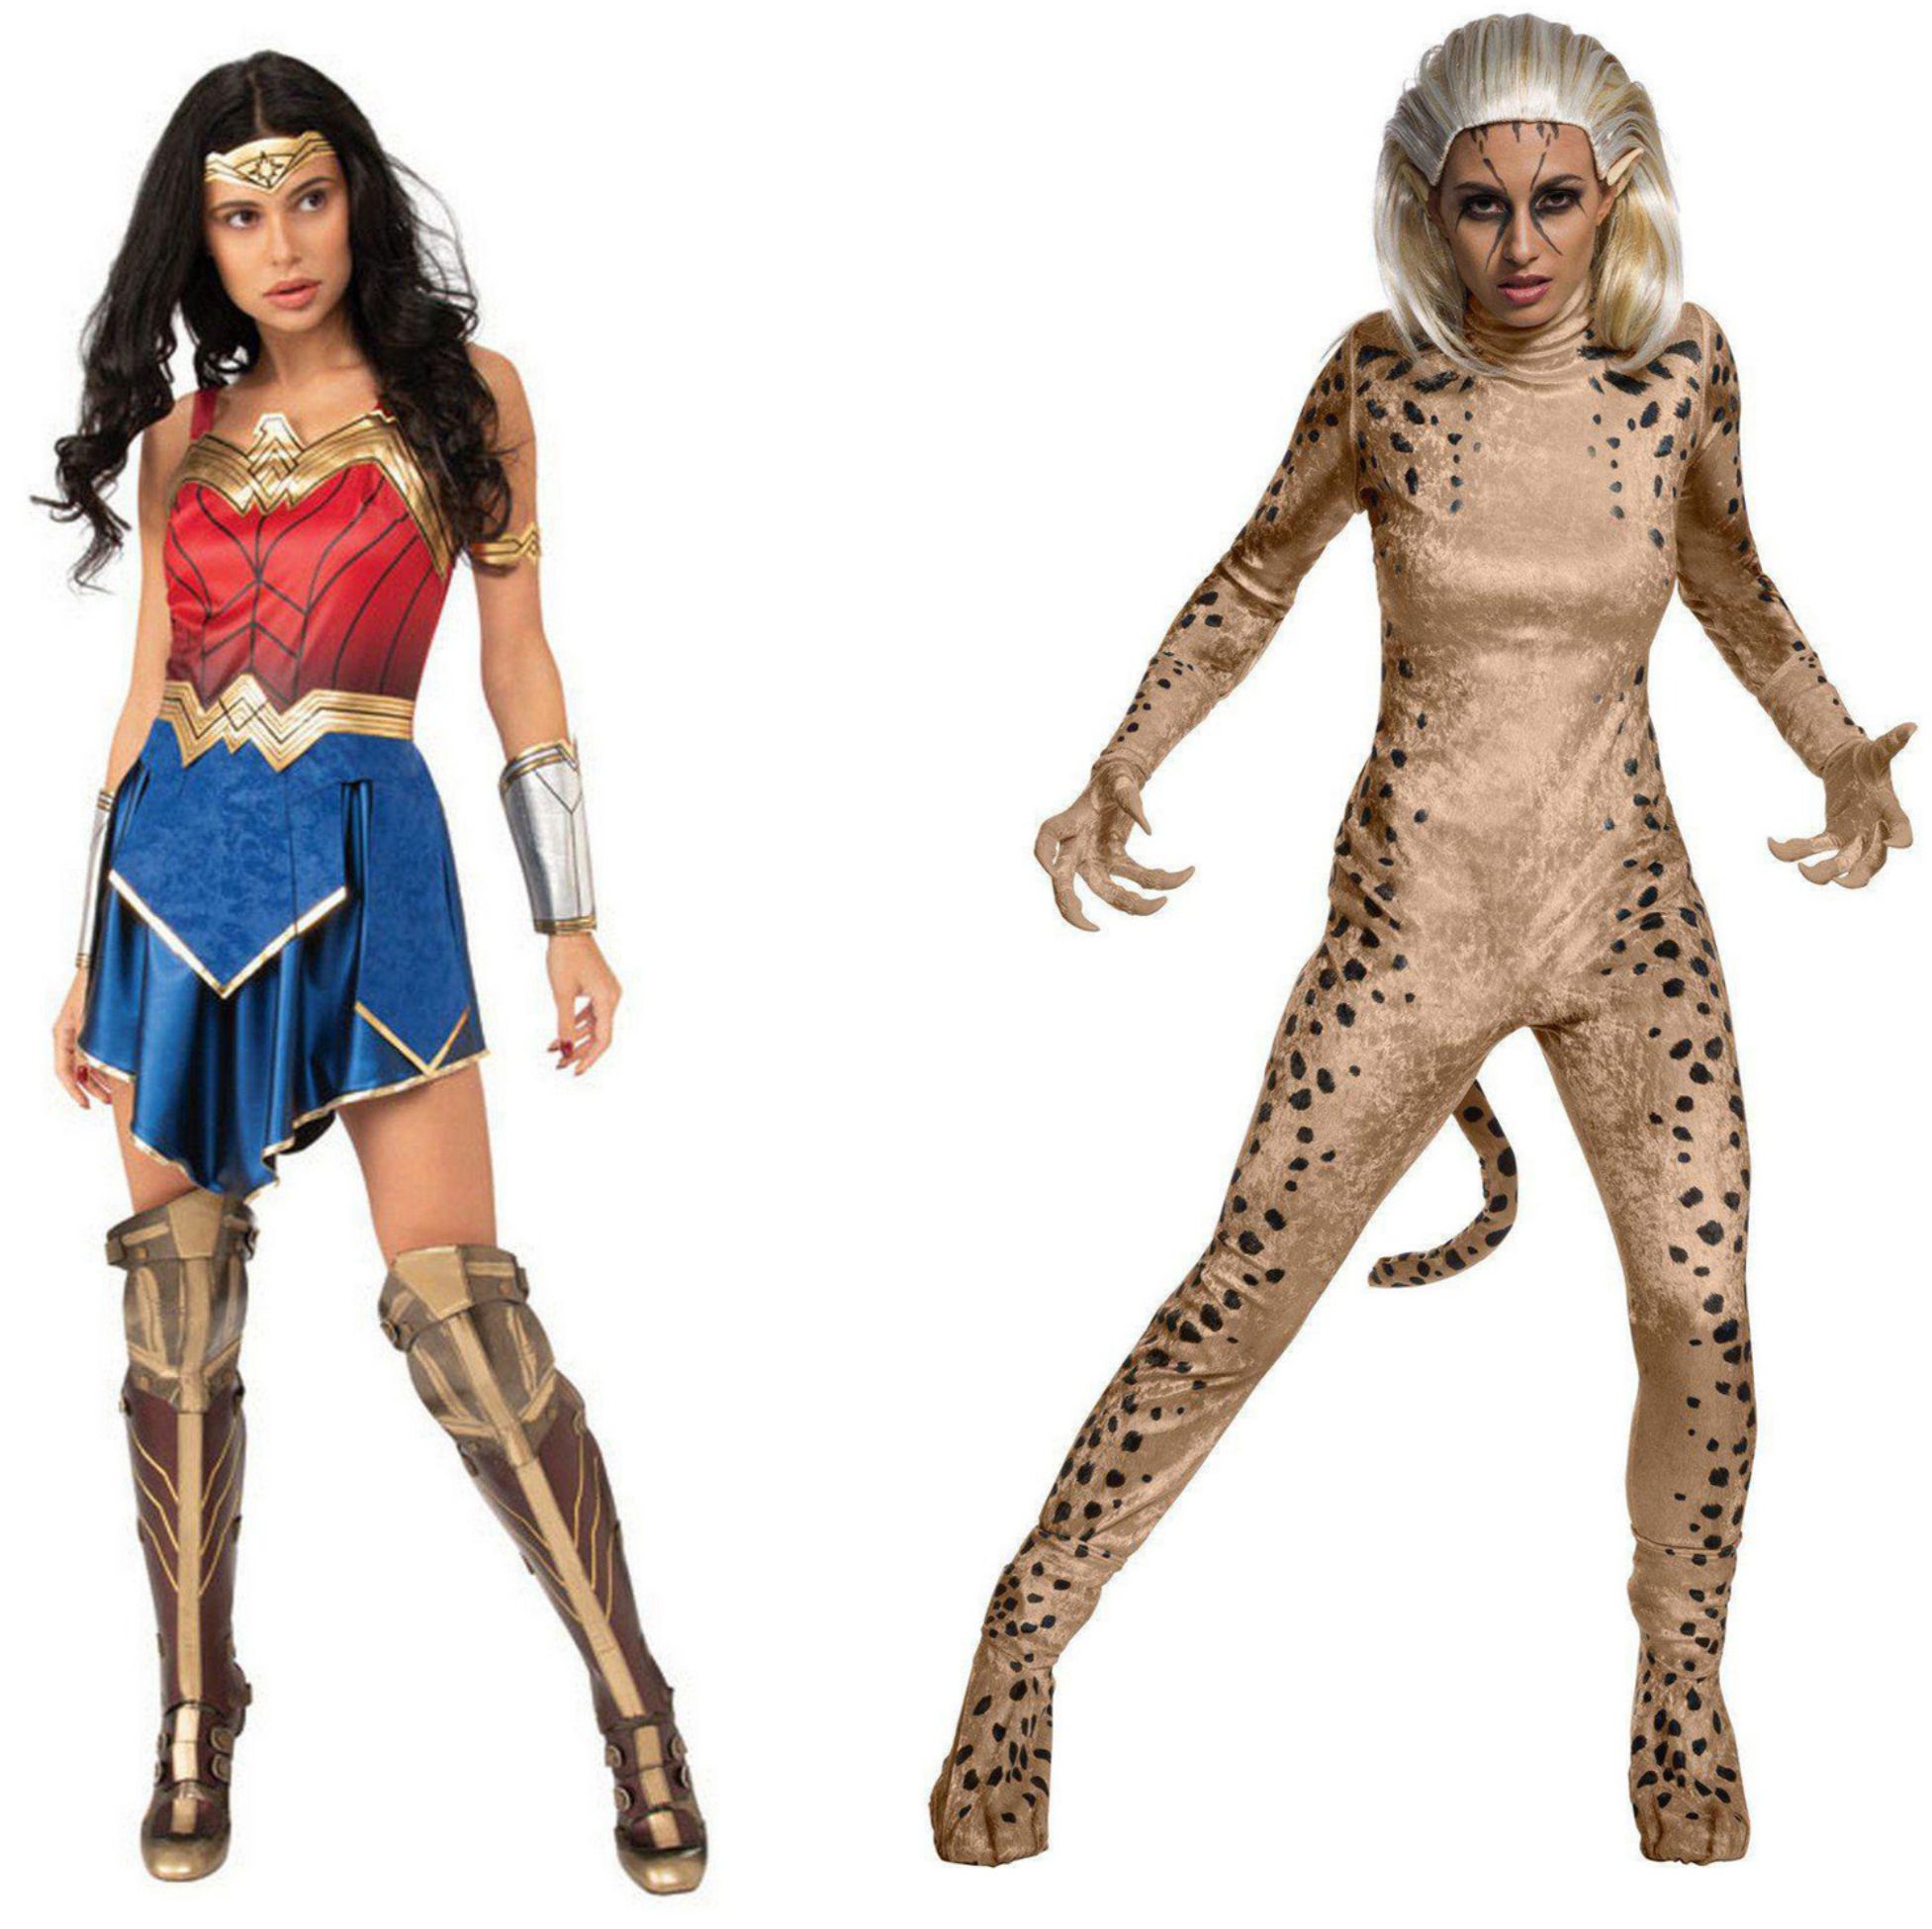 Cheetah Wonder Woman 1984 Costume #2